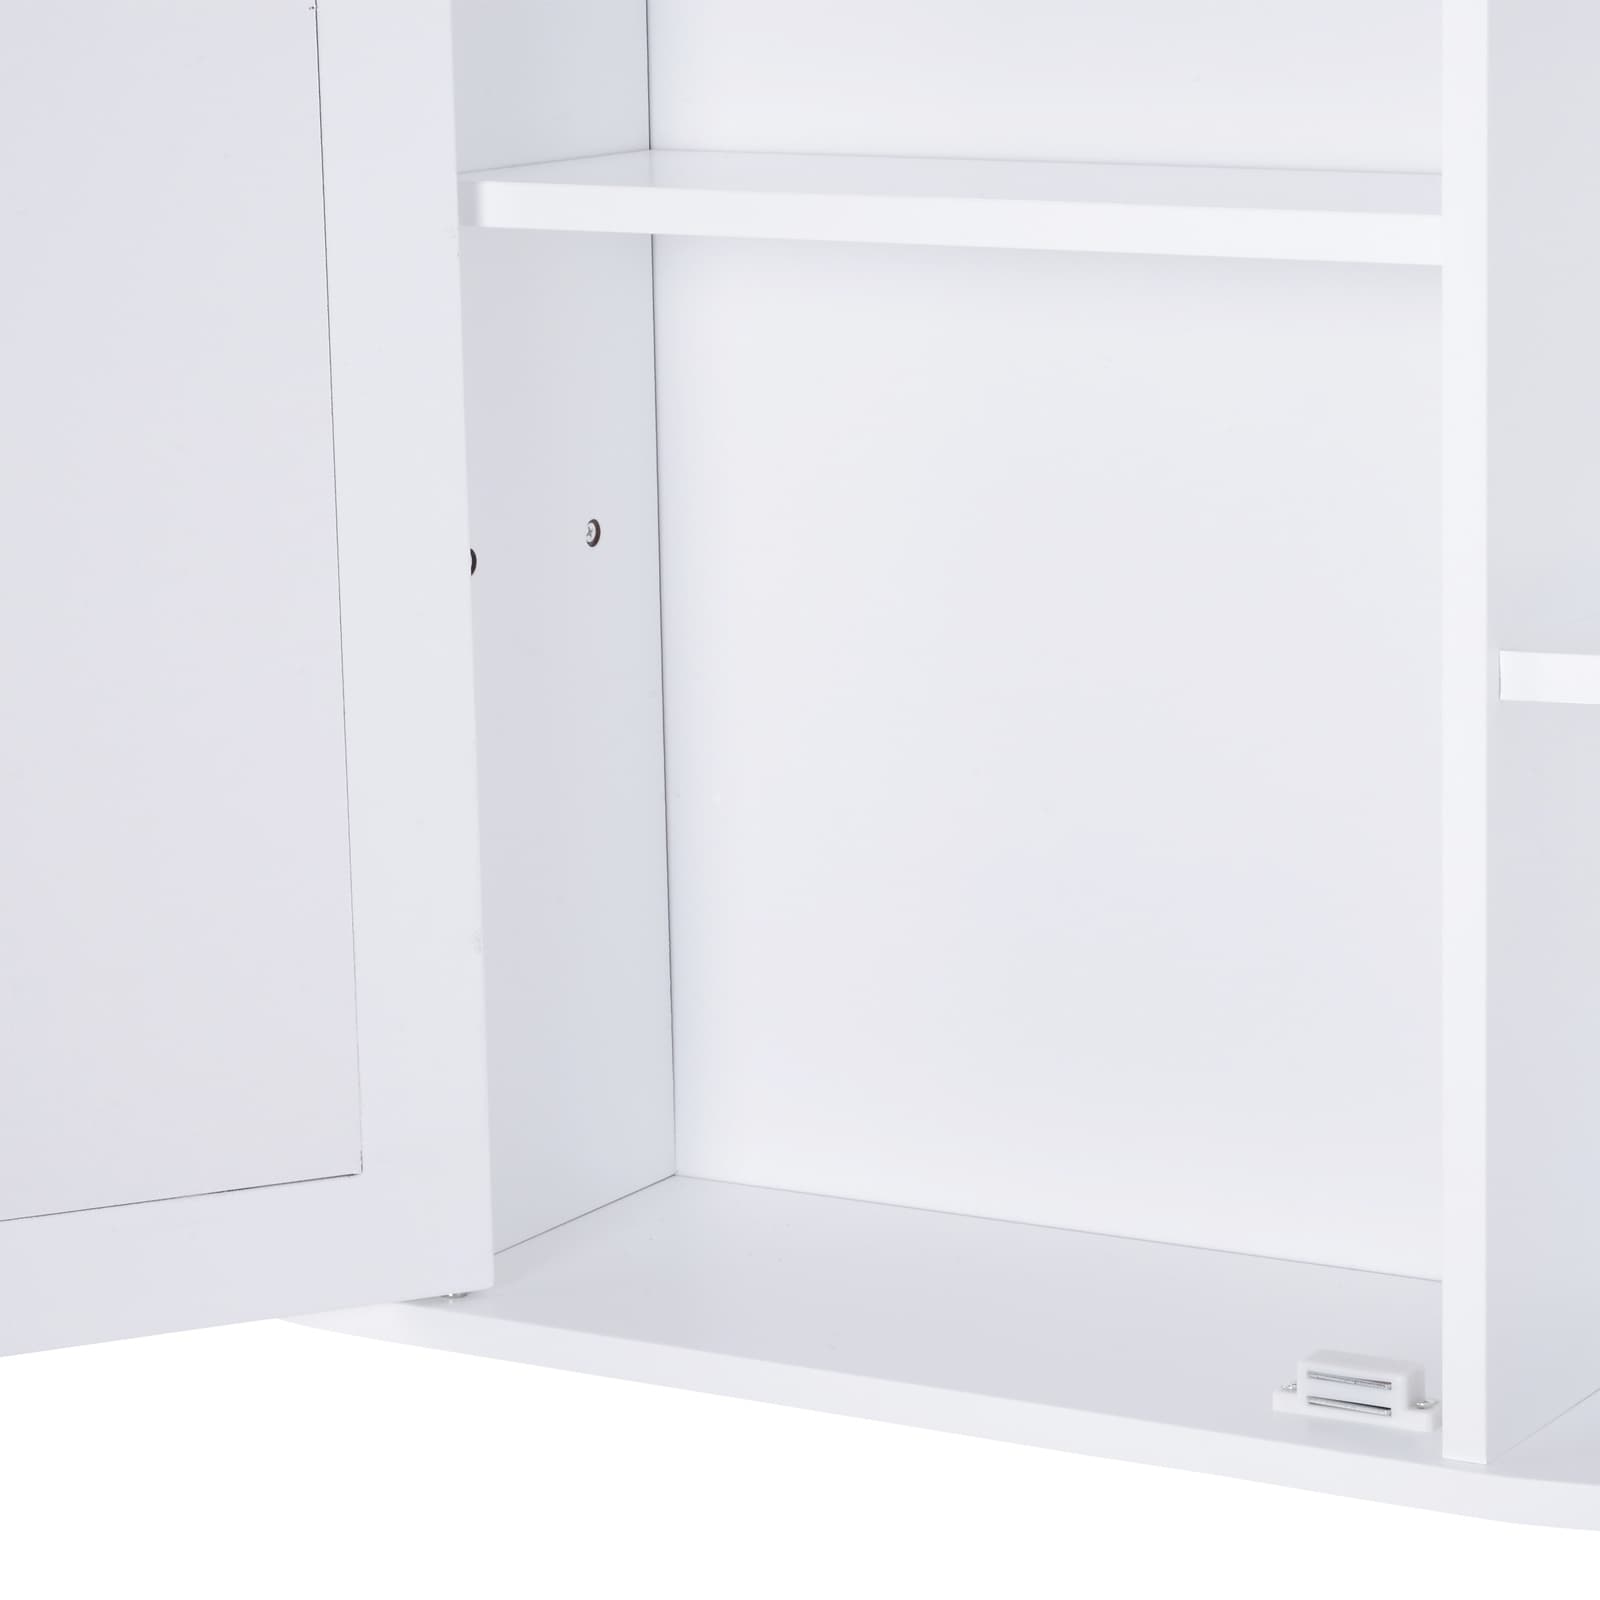 Over-the-Sink Bathroom Storage Organizer Cabinet with Mirrored  Door,Shelves, 1 Unit - Gerbes Super Markets